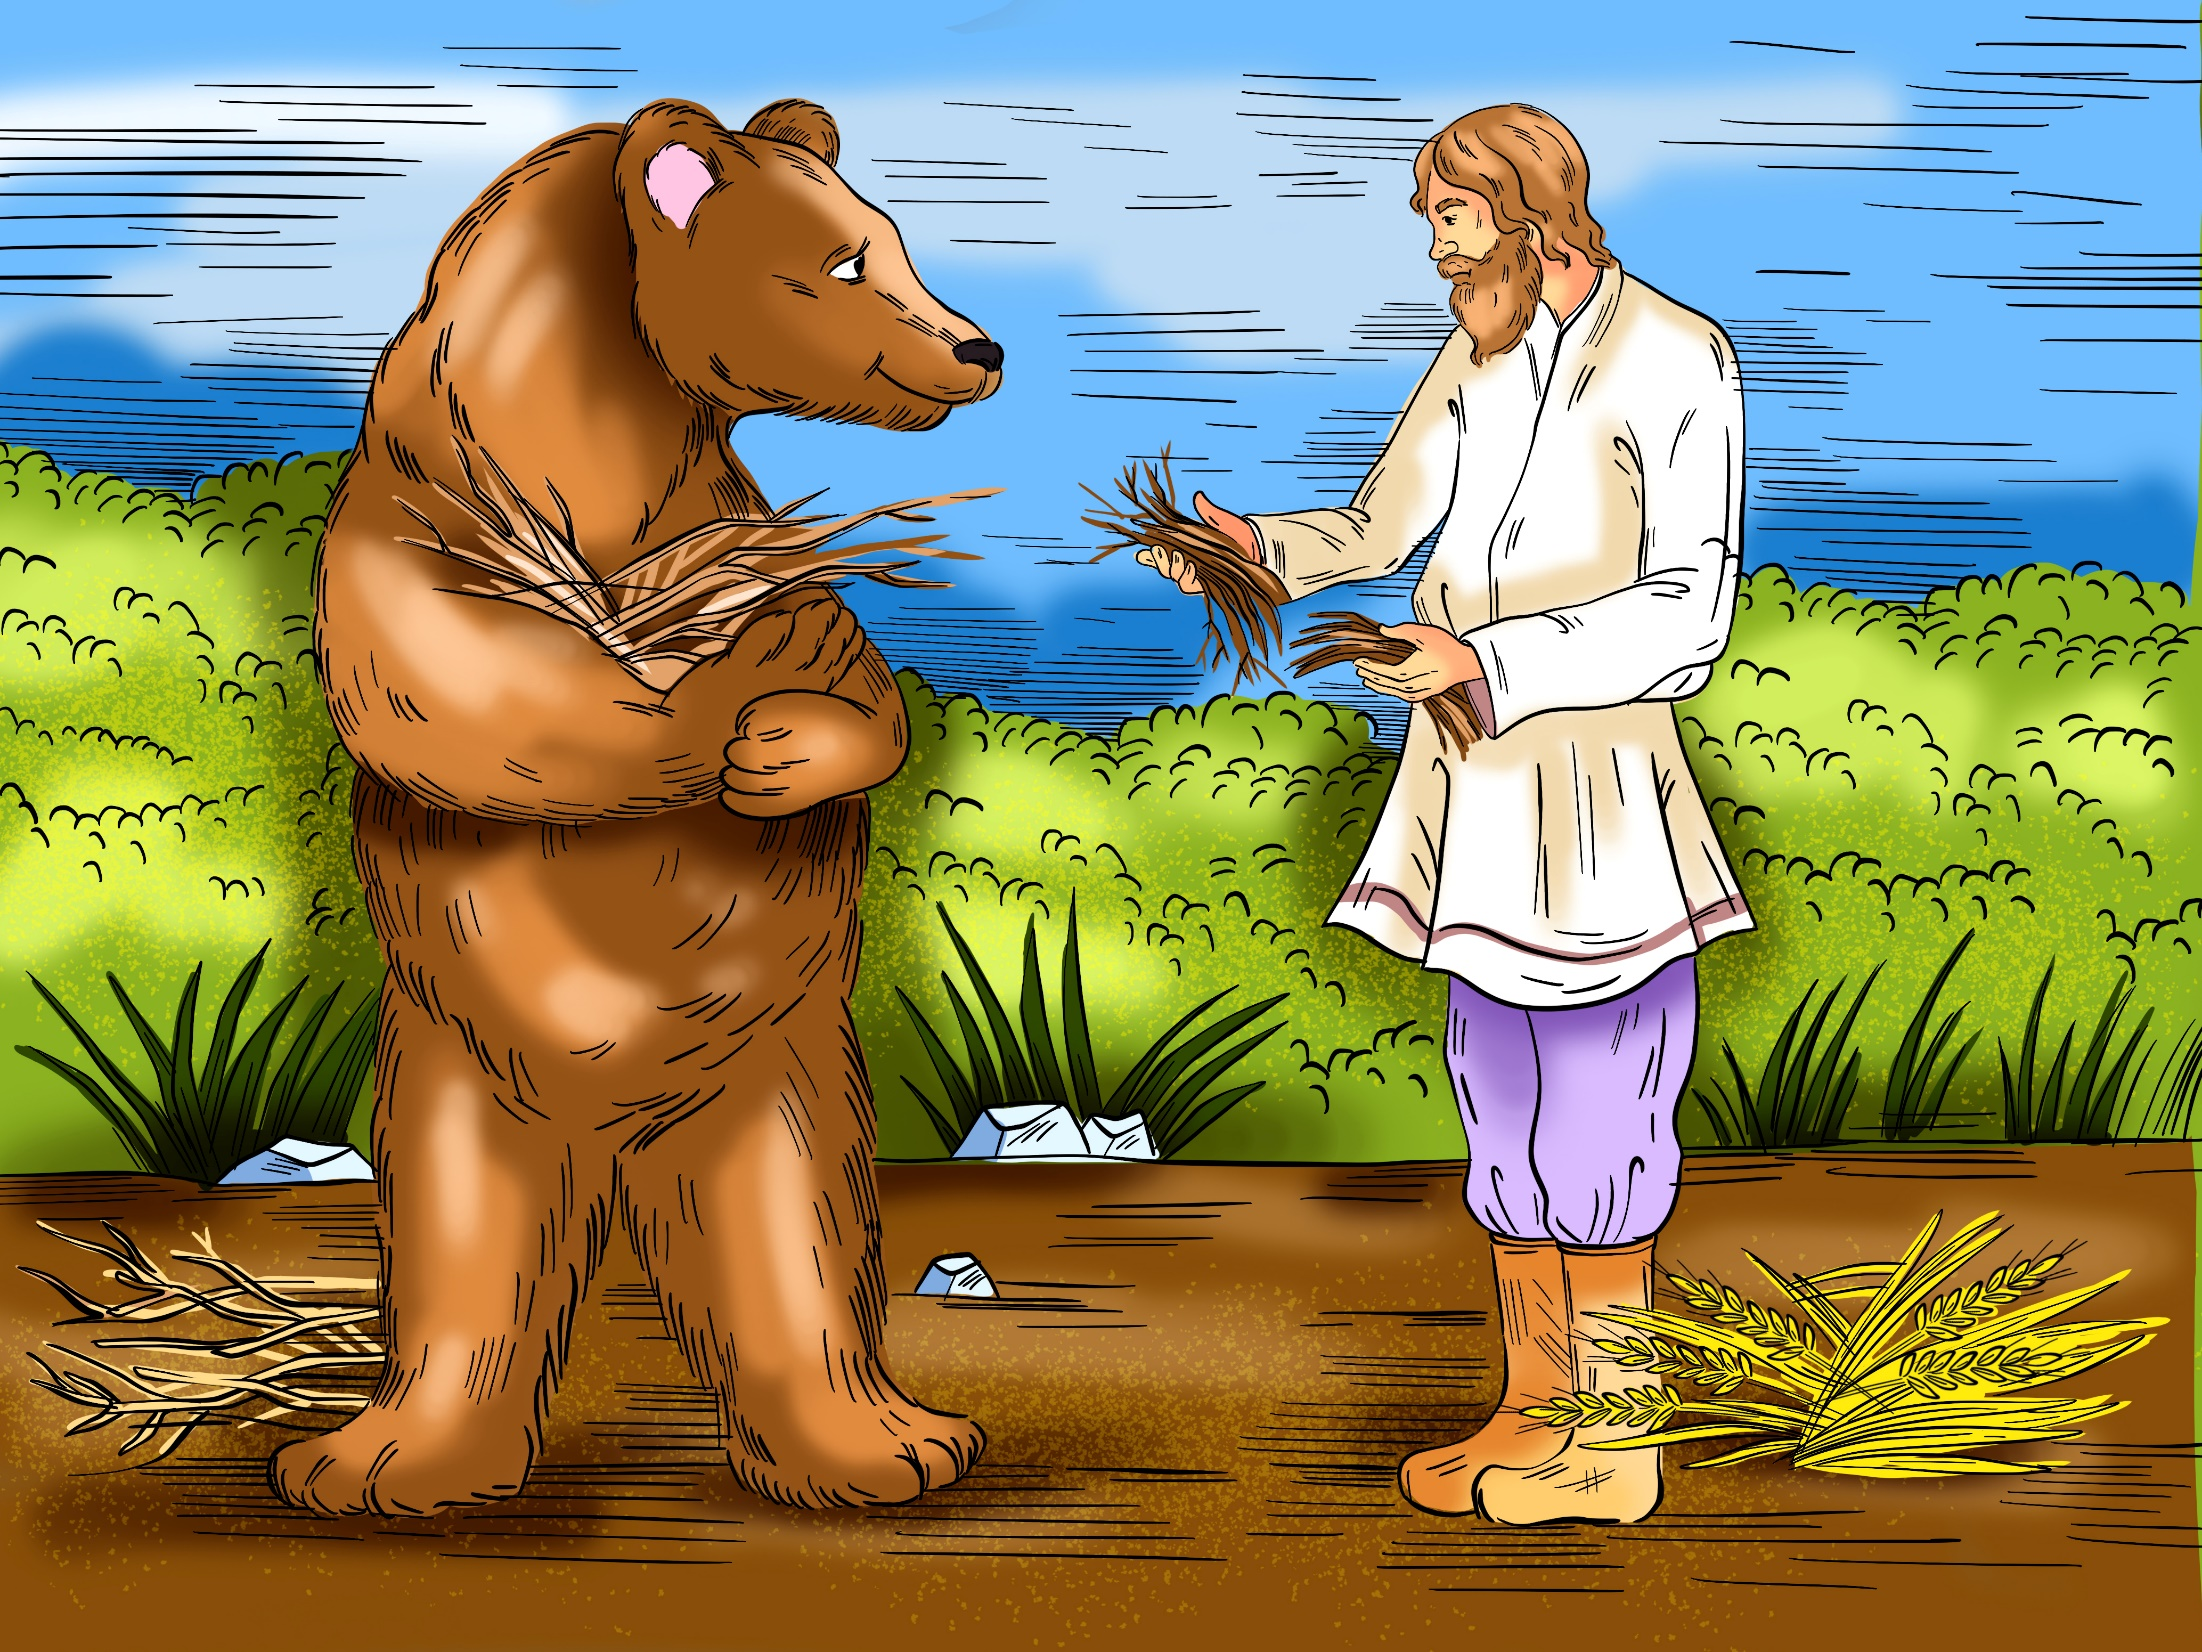 Сказки про мужчин. Мужик и медведь вершки и корешки. Вершки и корешки медведь. Вершки и корешки русская народная сказка.